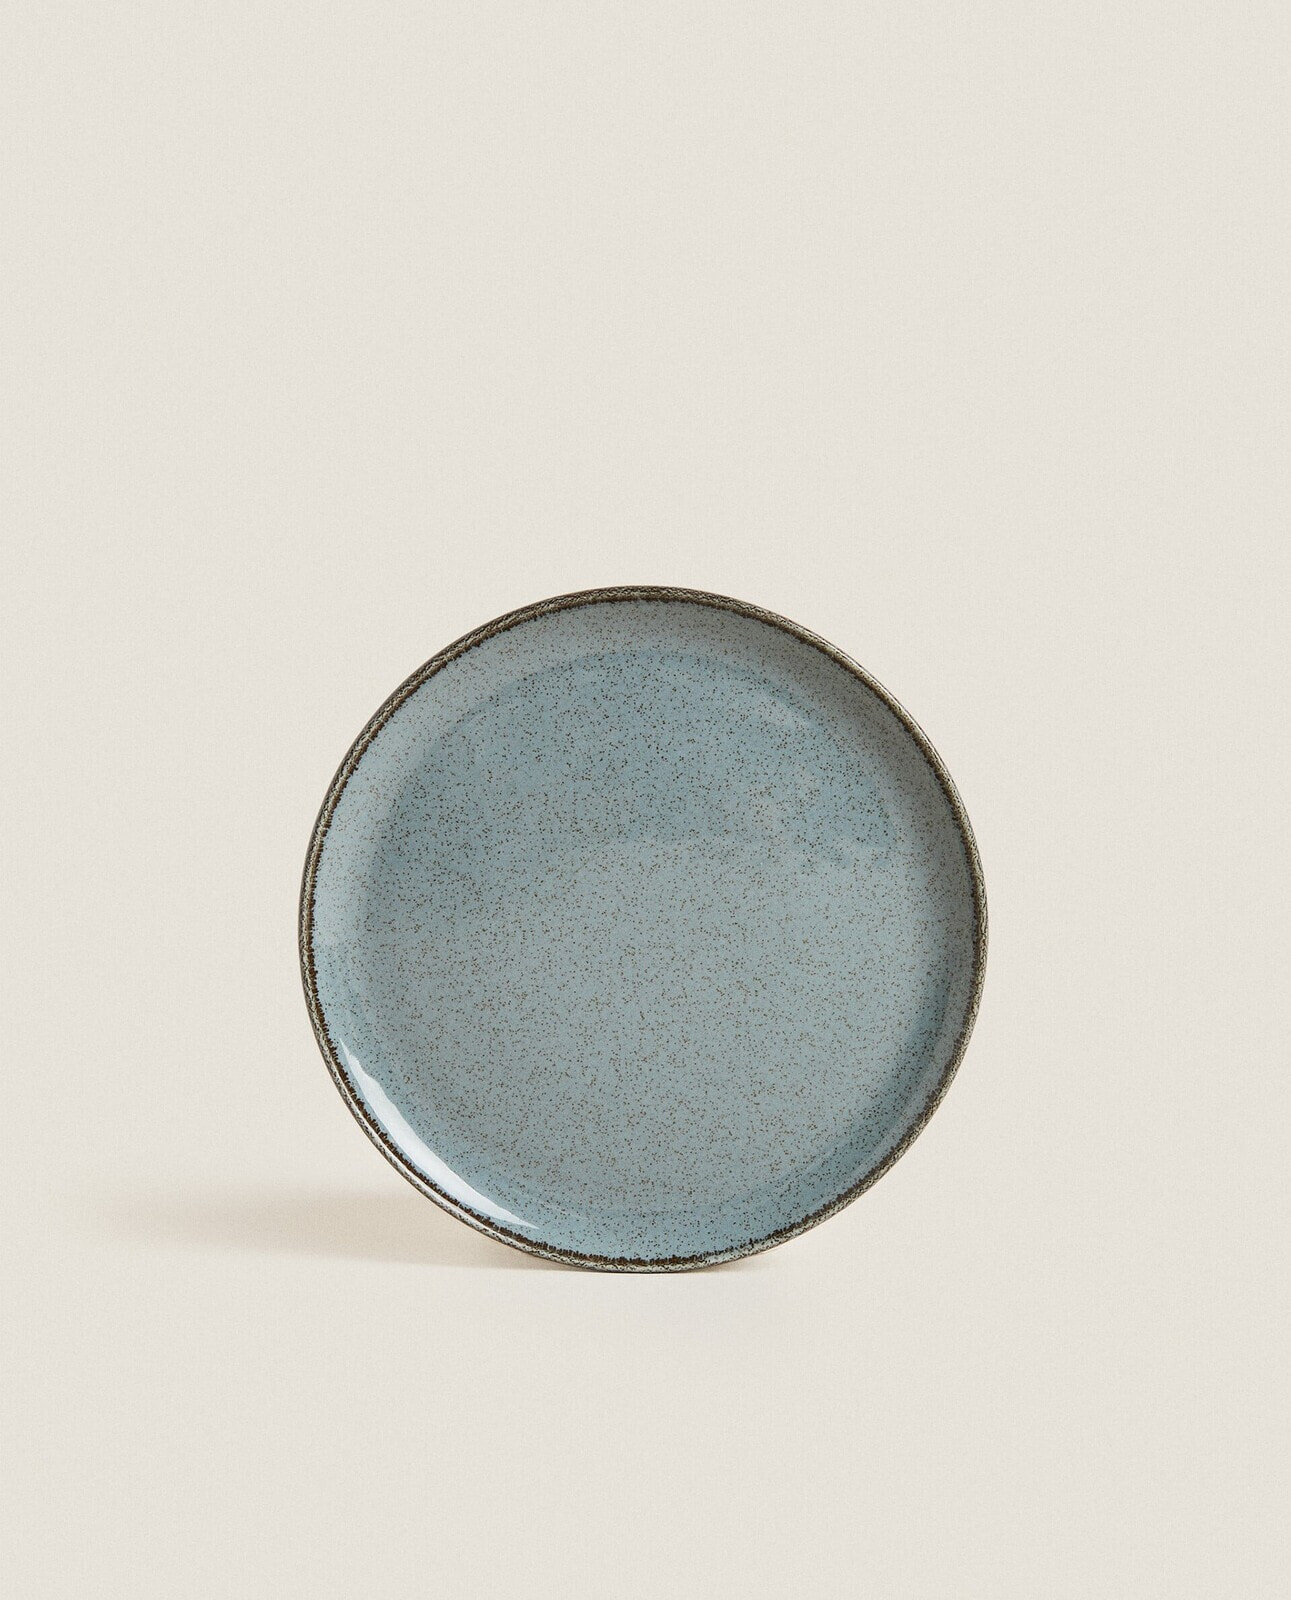 Porcelain side plate with antique finish rim